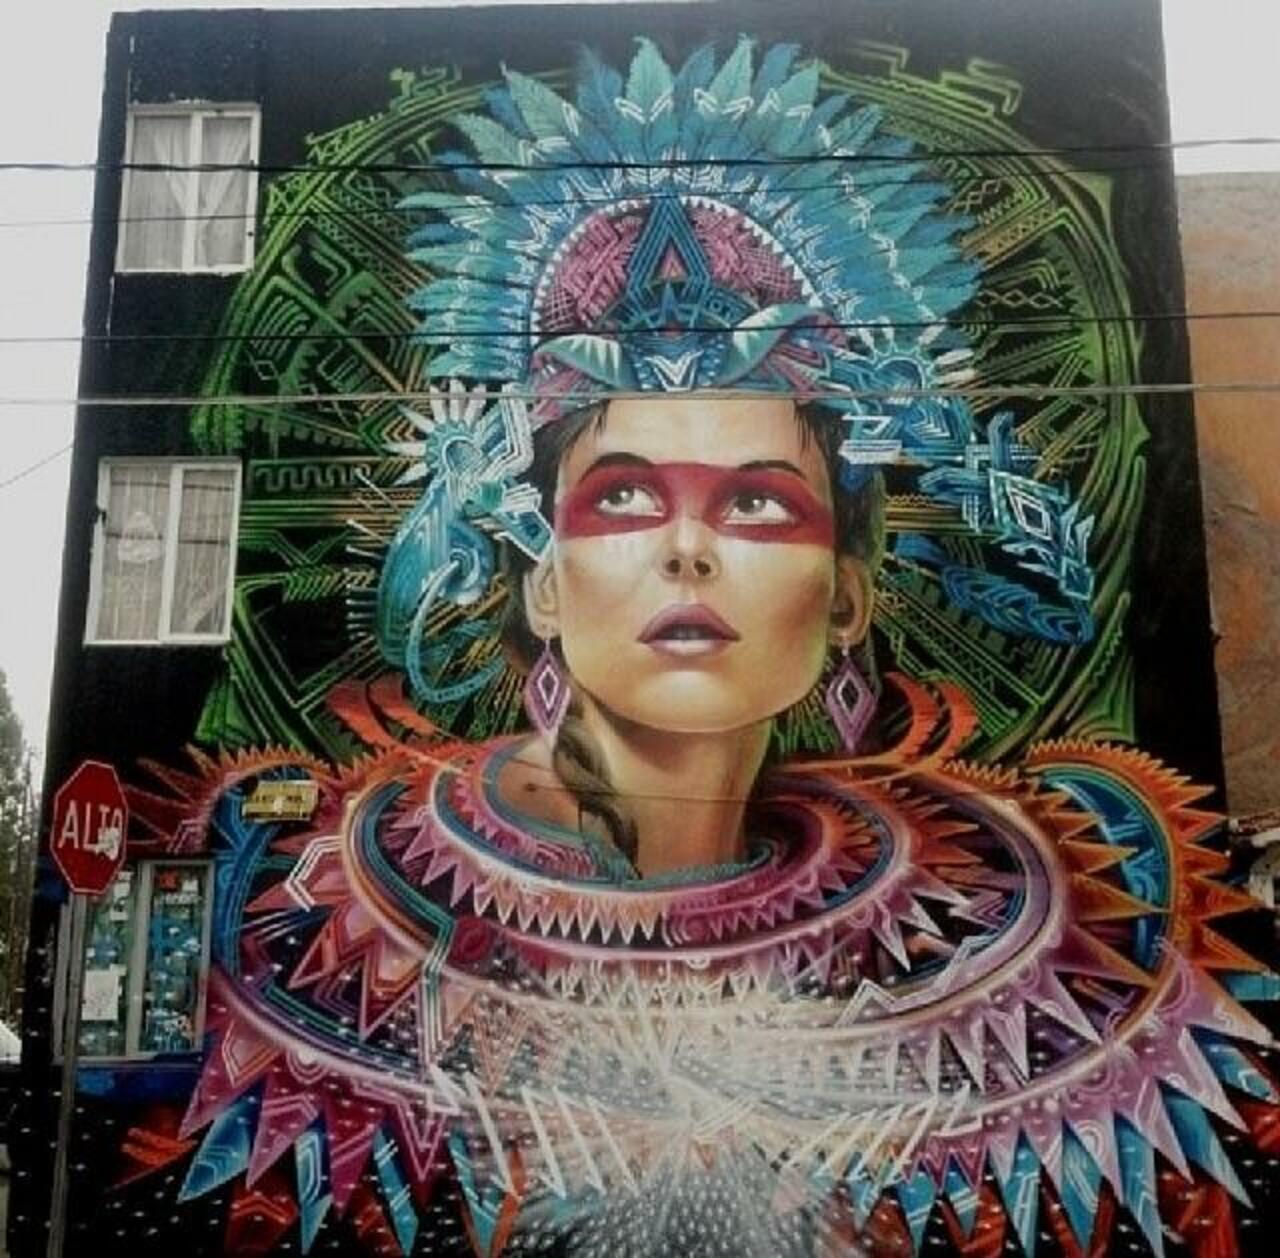 Artist 'Espectral Cauac Azul' glorious large scale Street Art in Mexico #art #graffiti #mural #streetart http://t.co/l2jO8MxoyX